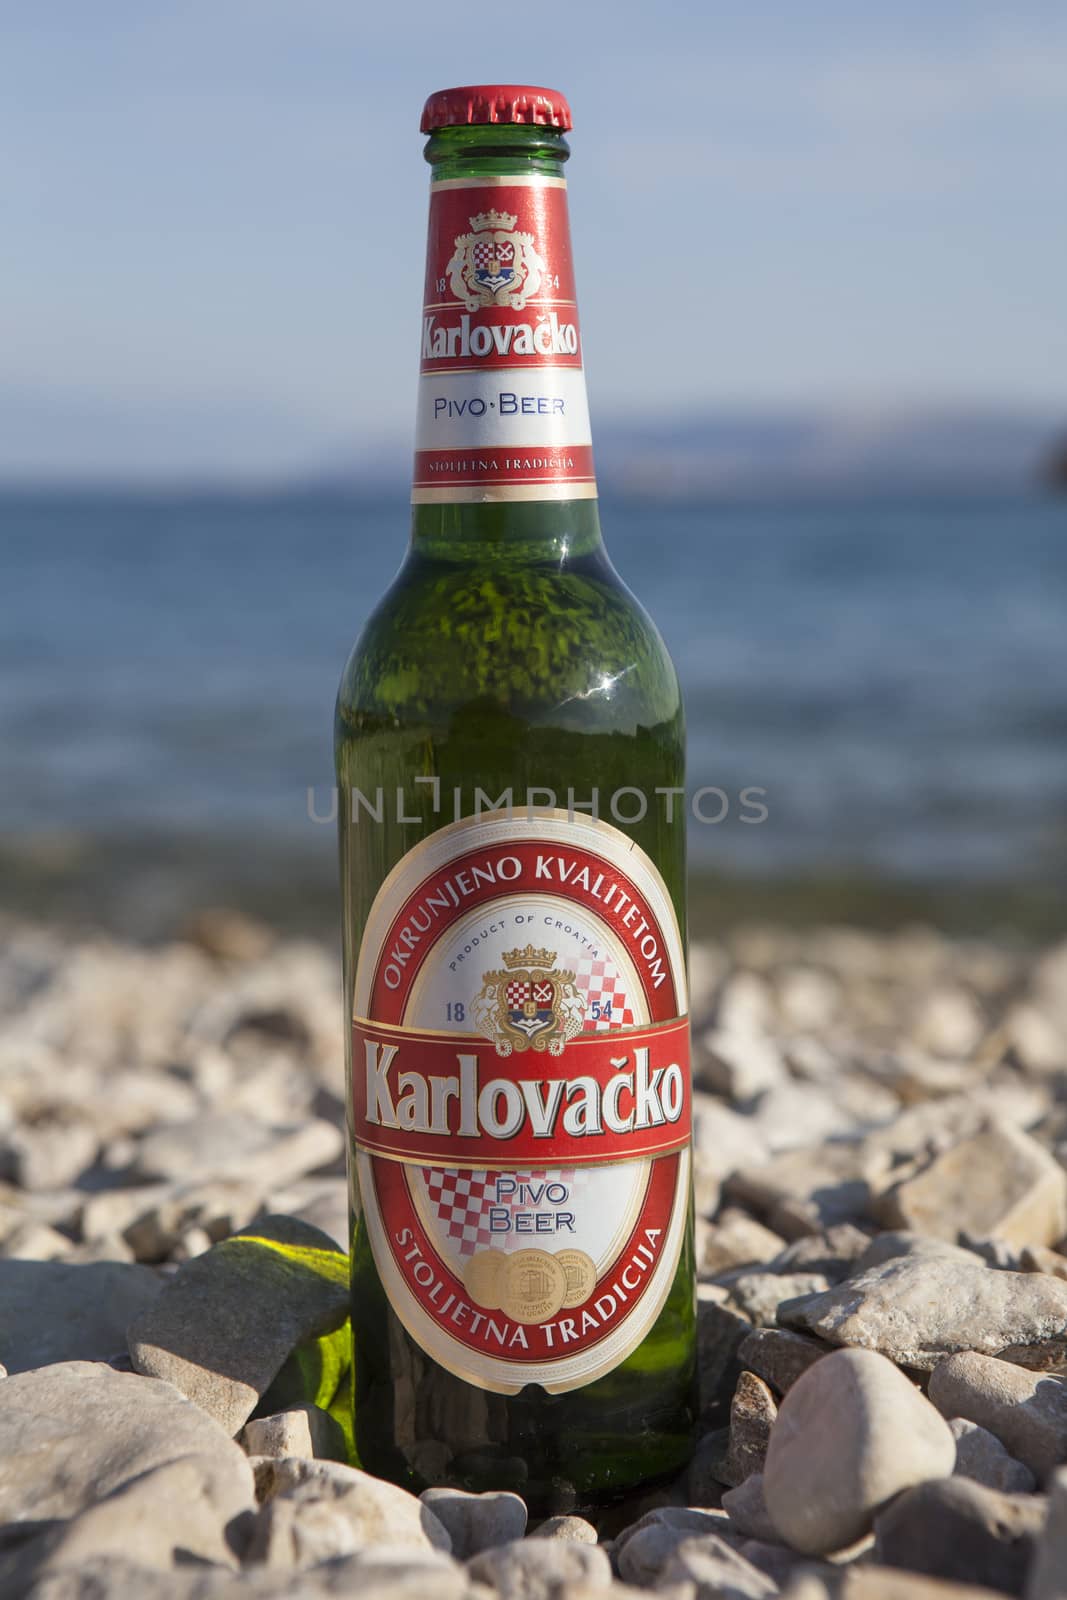 Karlovacko beer by bayberry